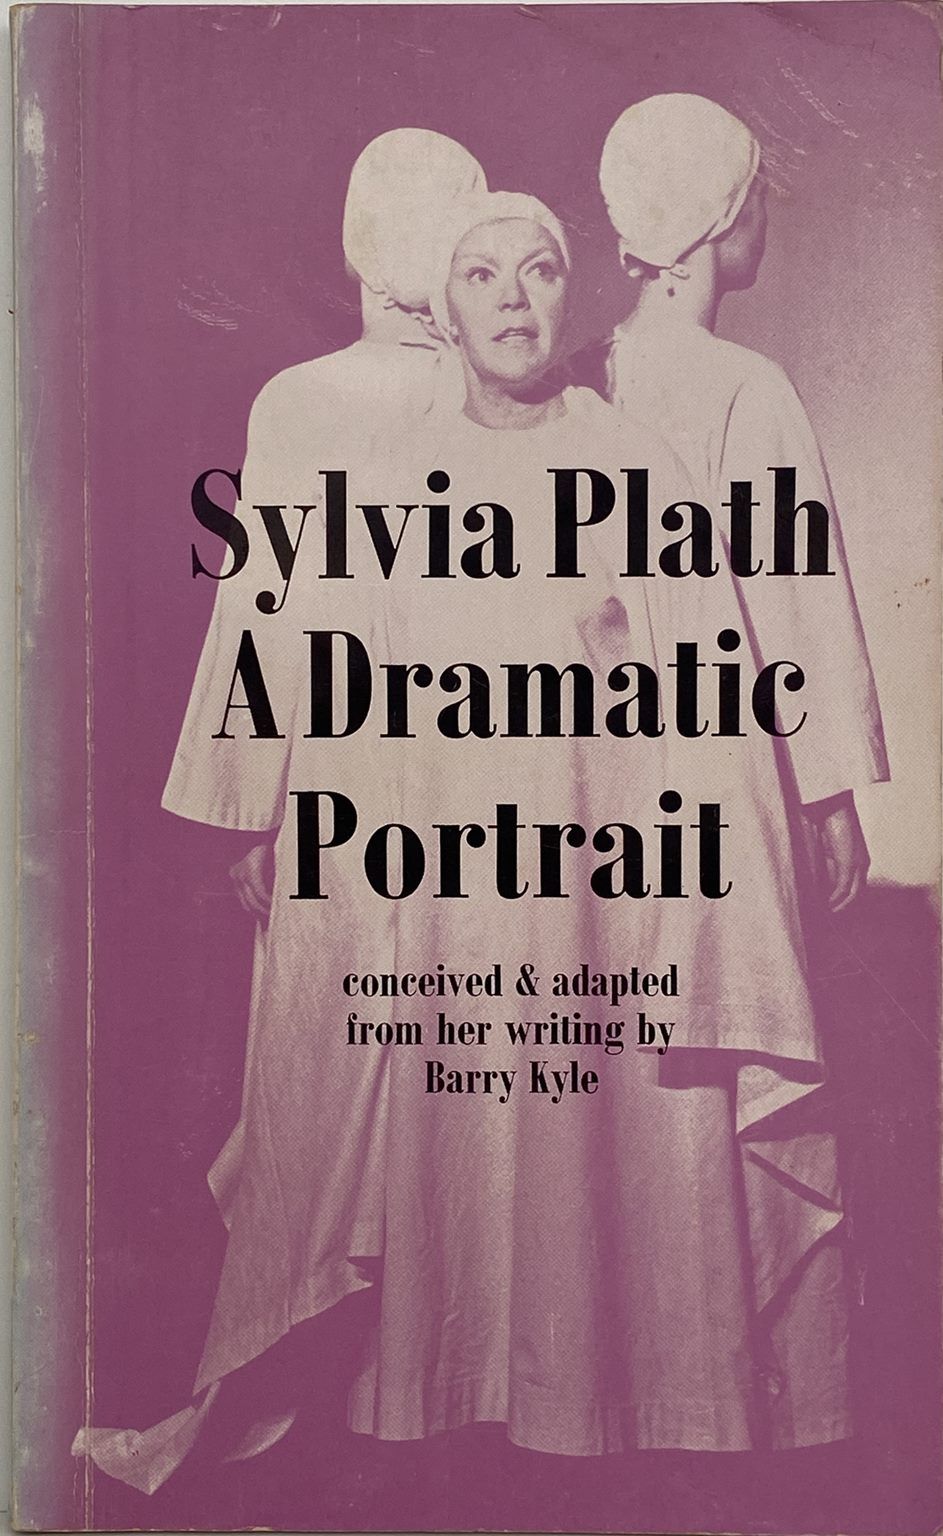 A DRAMATIC PORTRAIT: Poems by Sylvia Plath